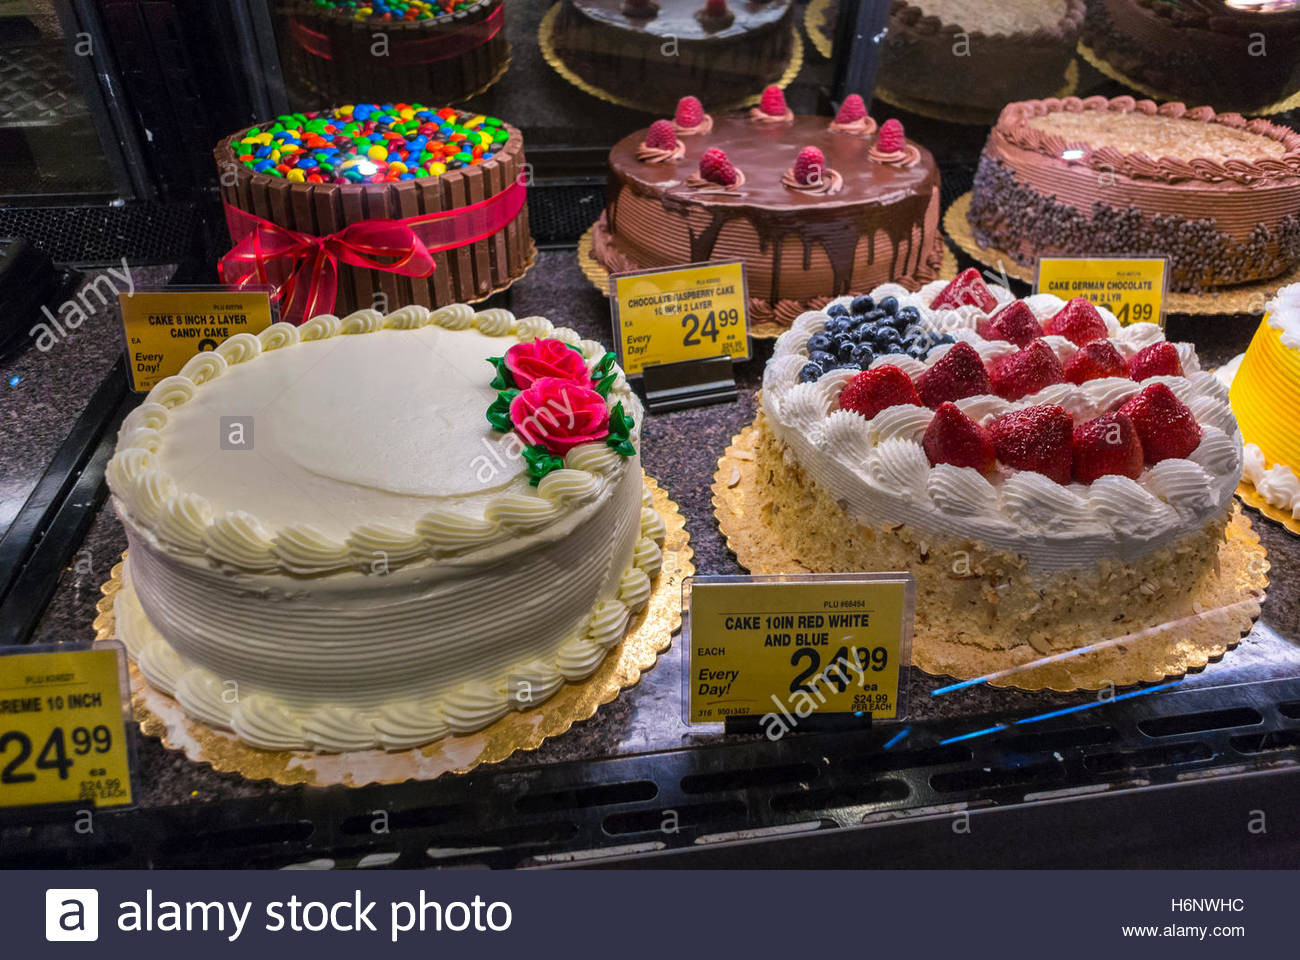 Safeway Bakery Birthday Cakes
 safeway bakery cake